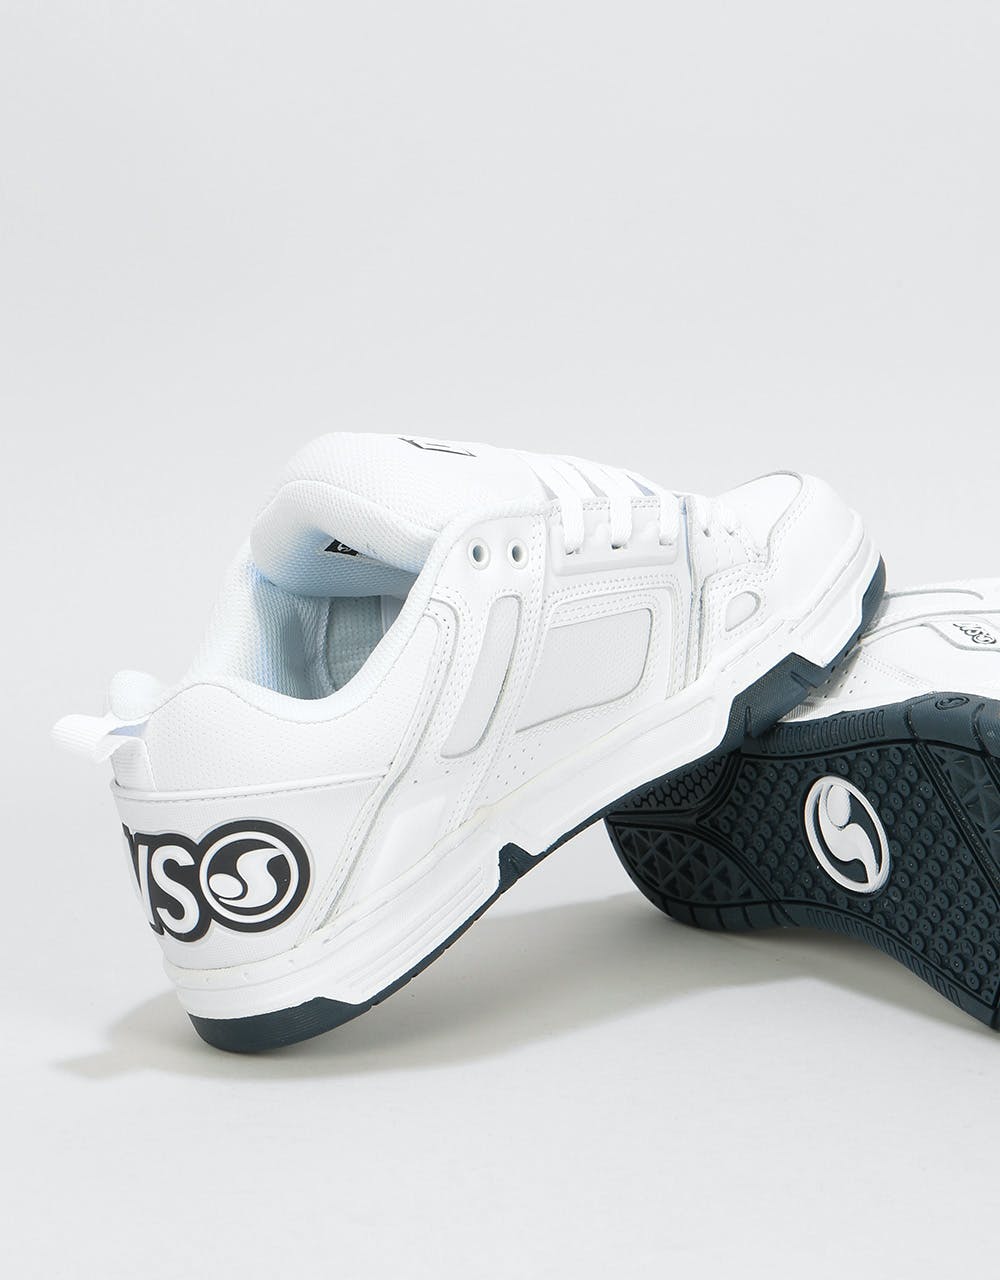 DVS Commanche Skate Shoes - White/Navy Nubuck